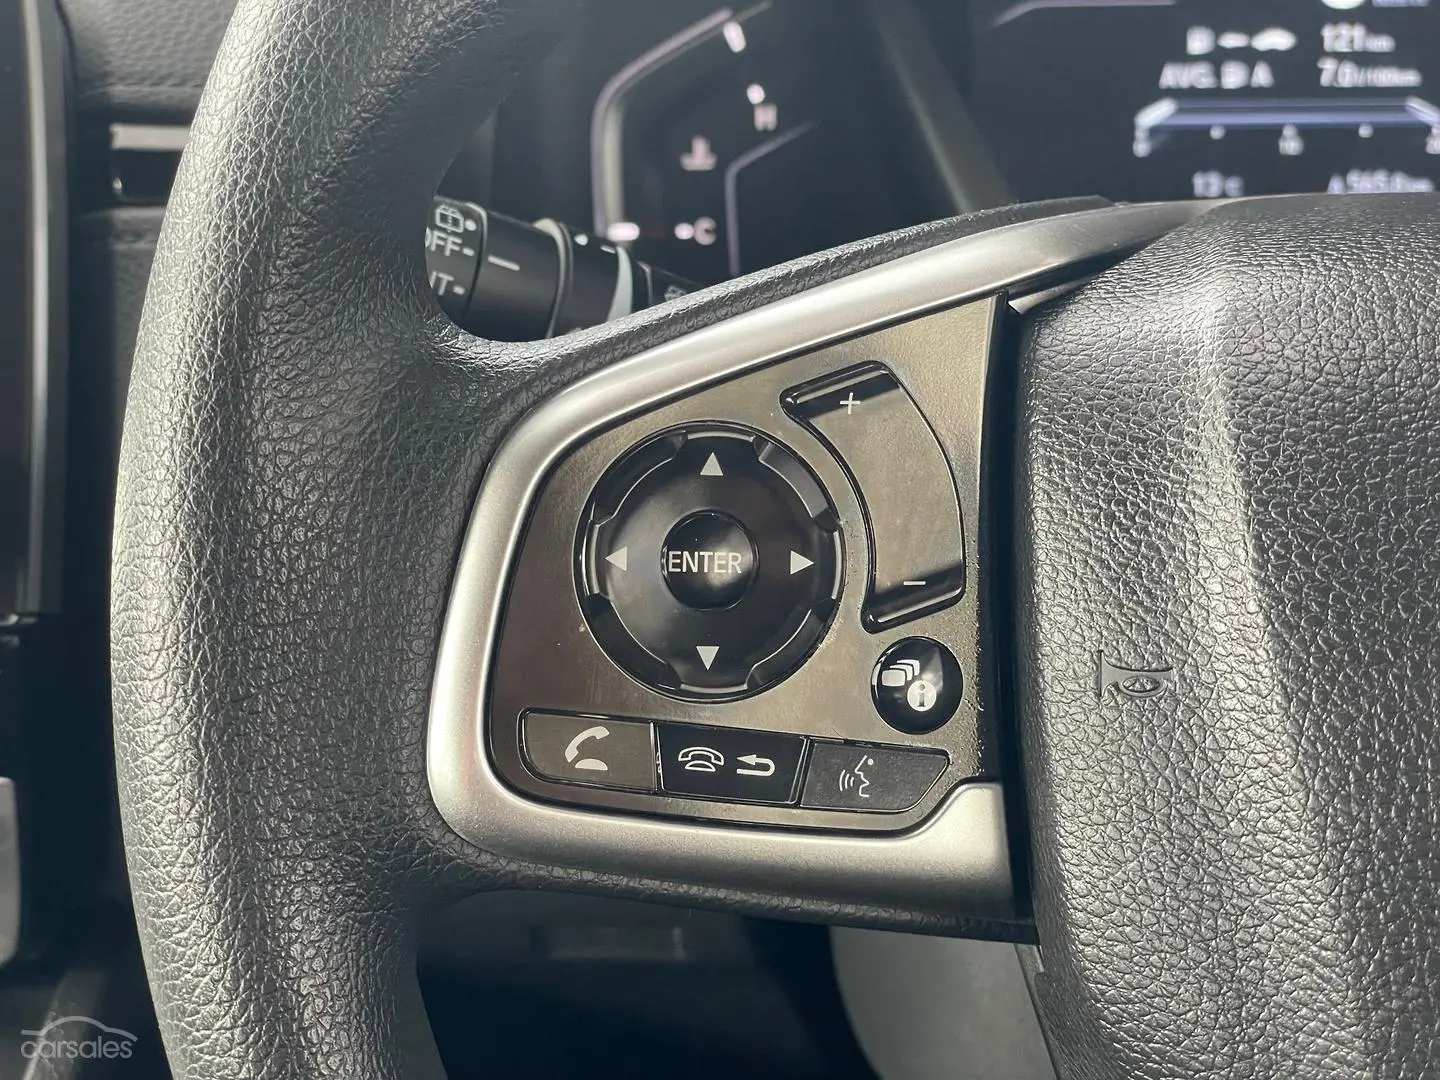 2019 Honda CR-V Image 20